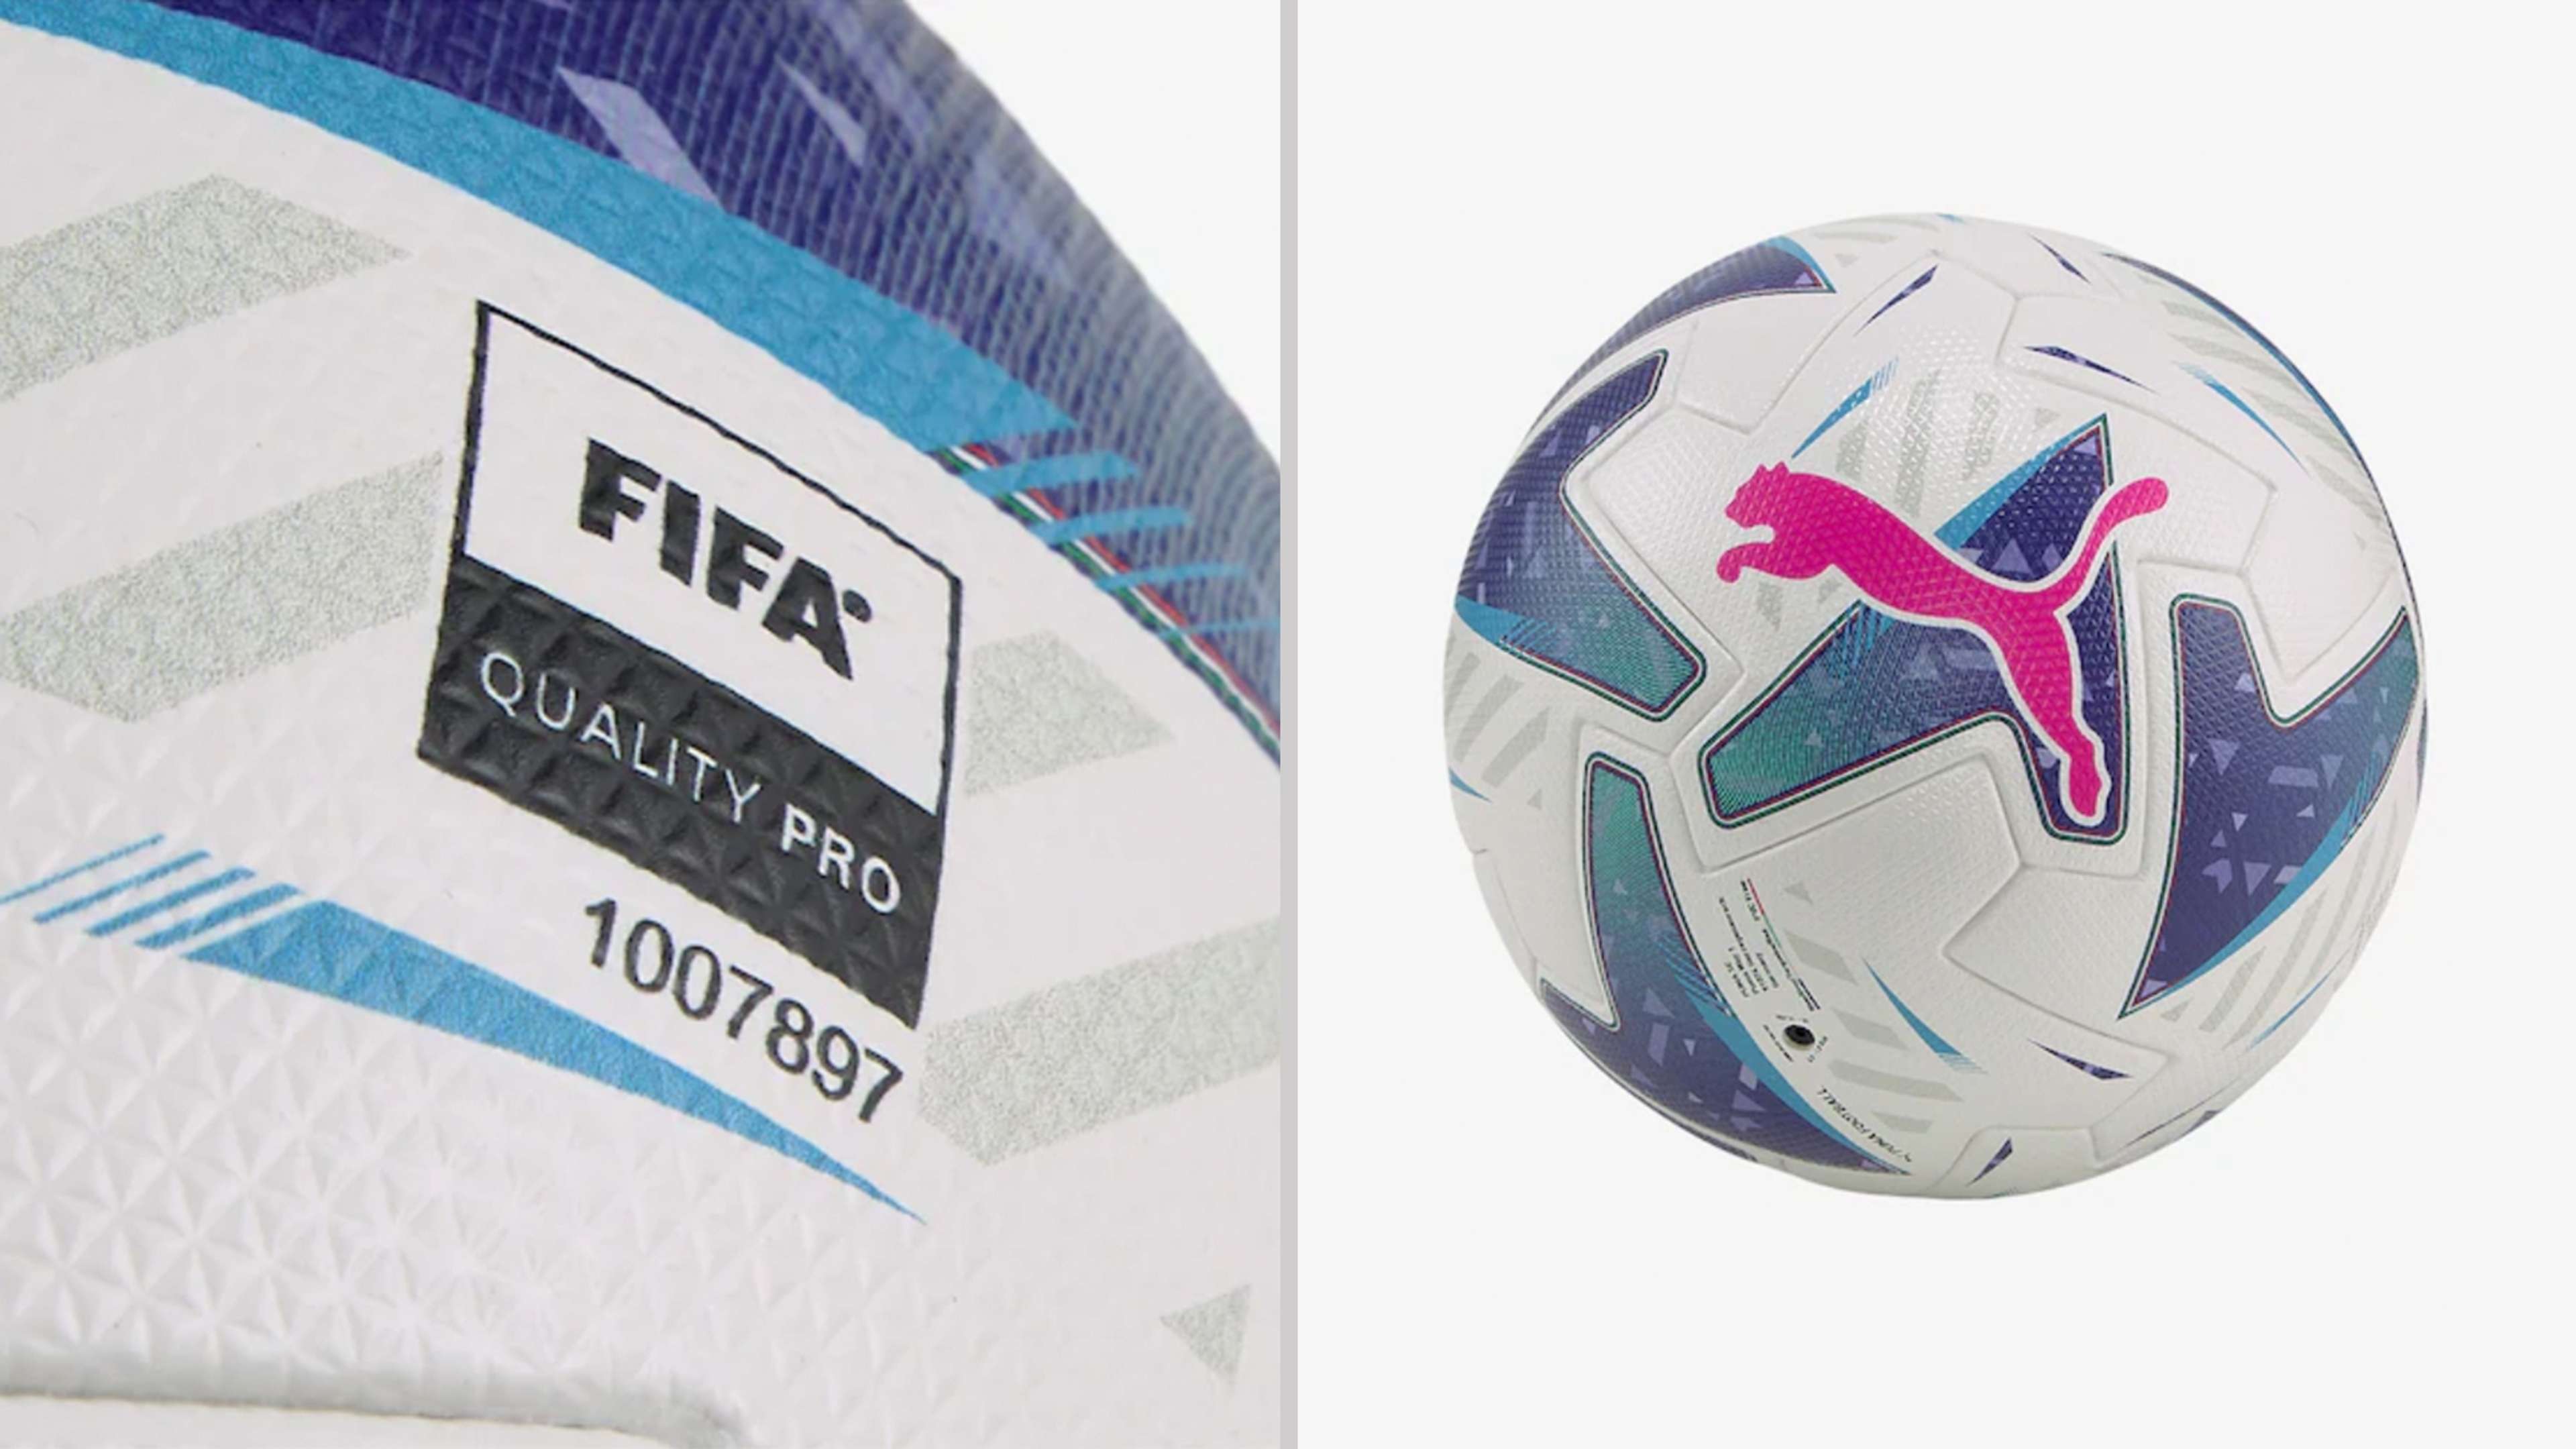 Puma Orbita Serie A ball (FIFA quality pro)